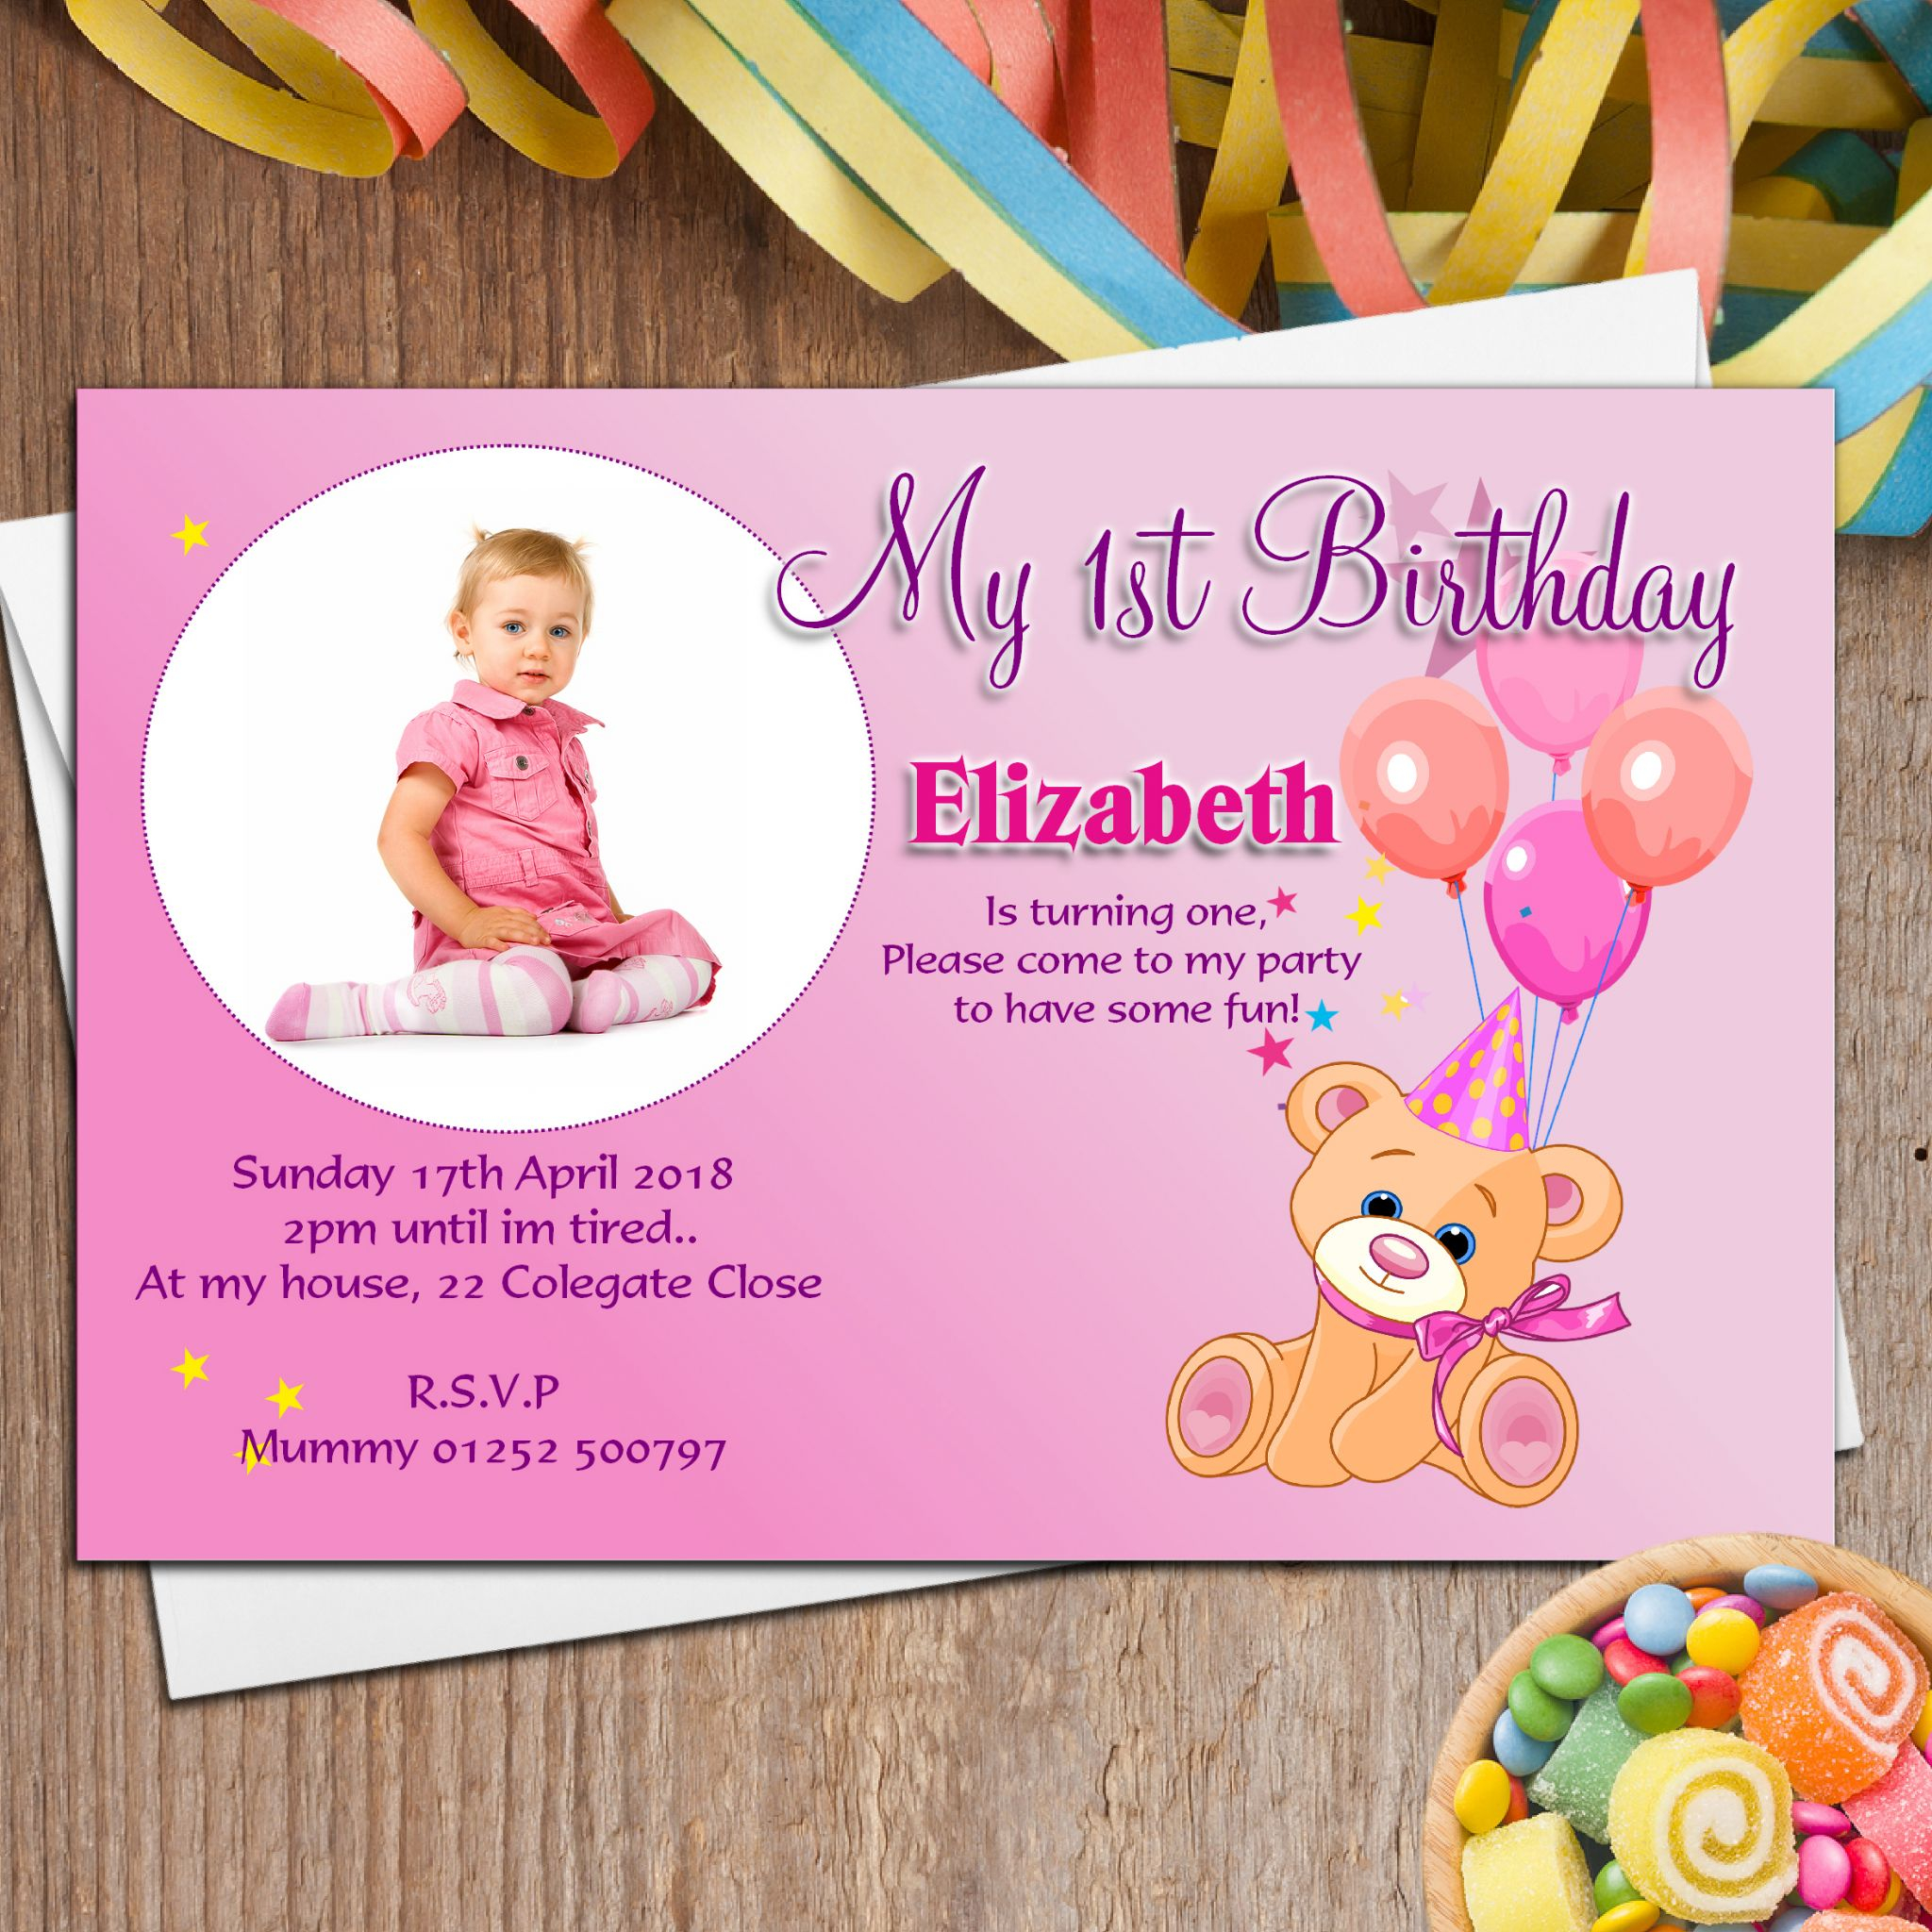 Birthday Card Invitation Ideas 97 Create Birthday Invitation Card Online For Free Free